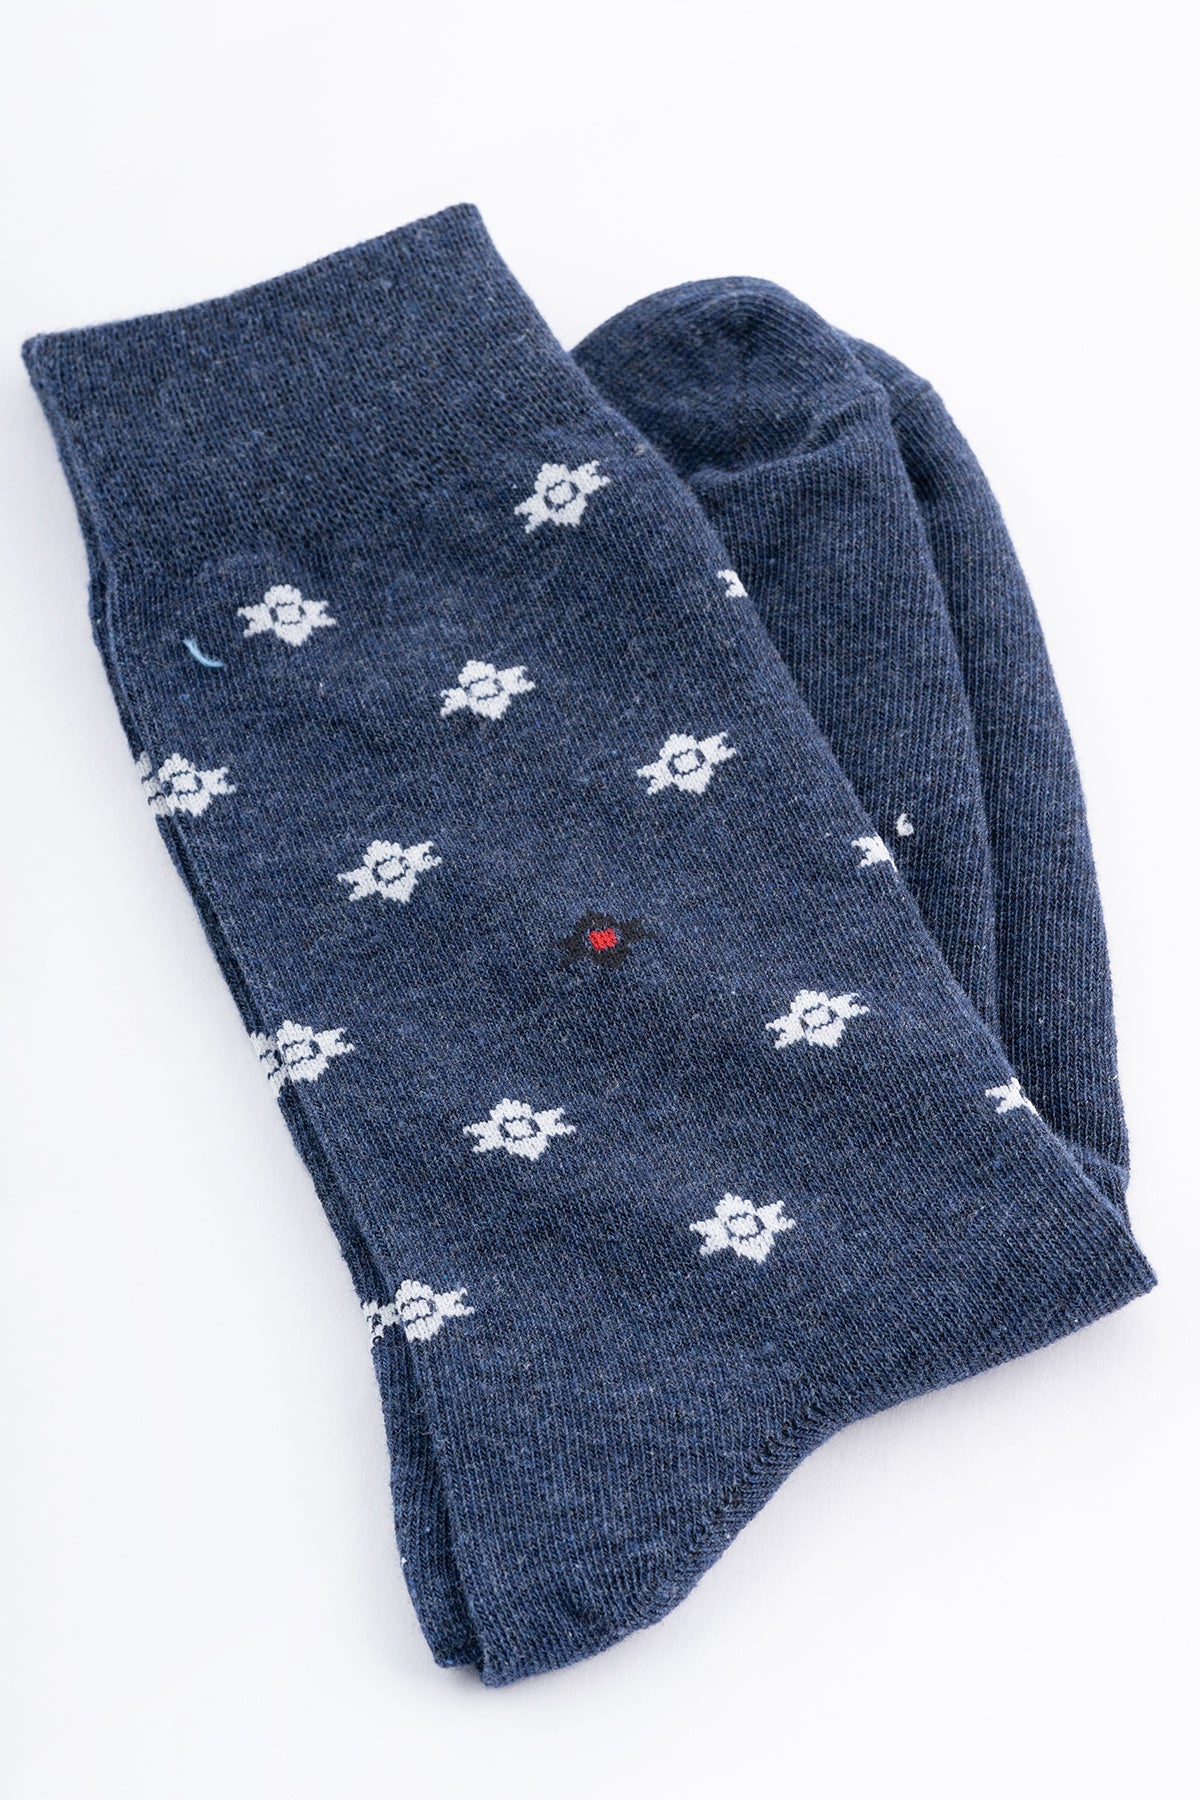 Men's Cotton Blended Blue Socks(combo set) (3 pairs)